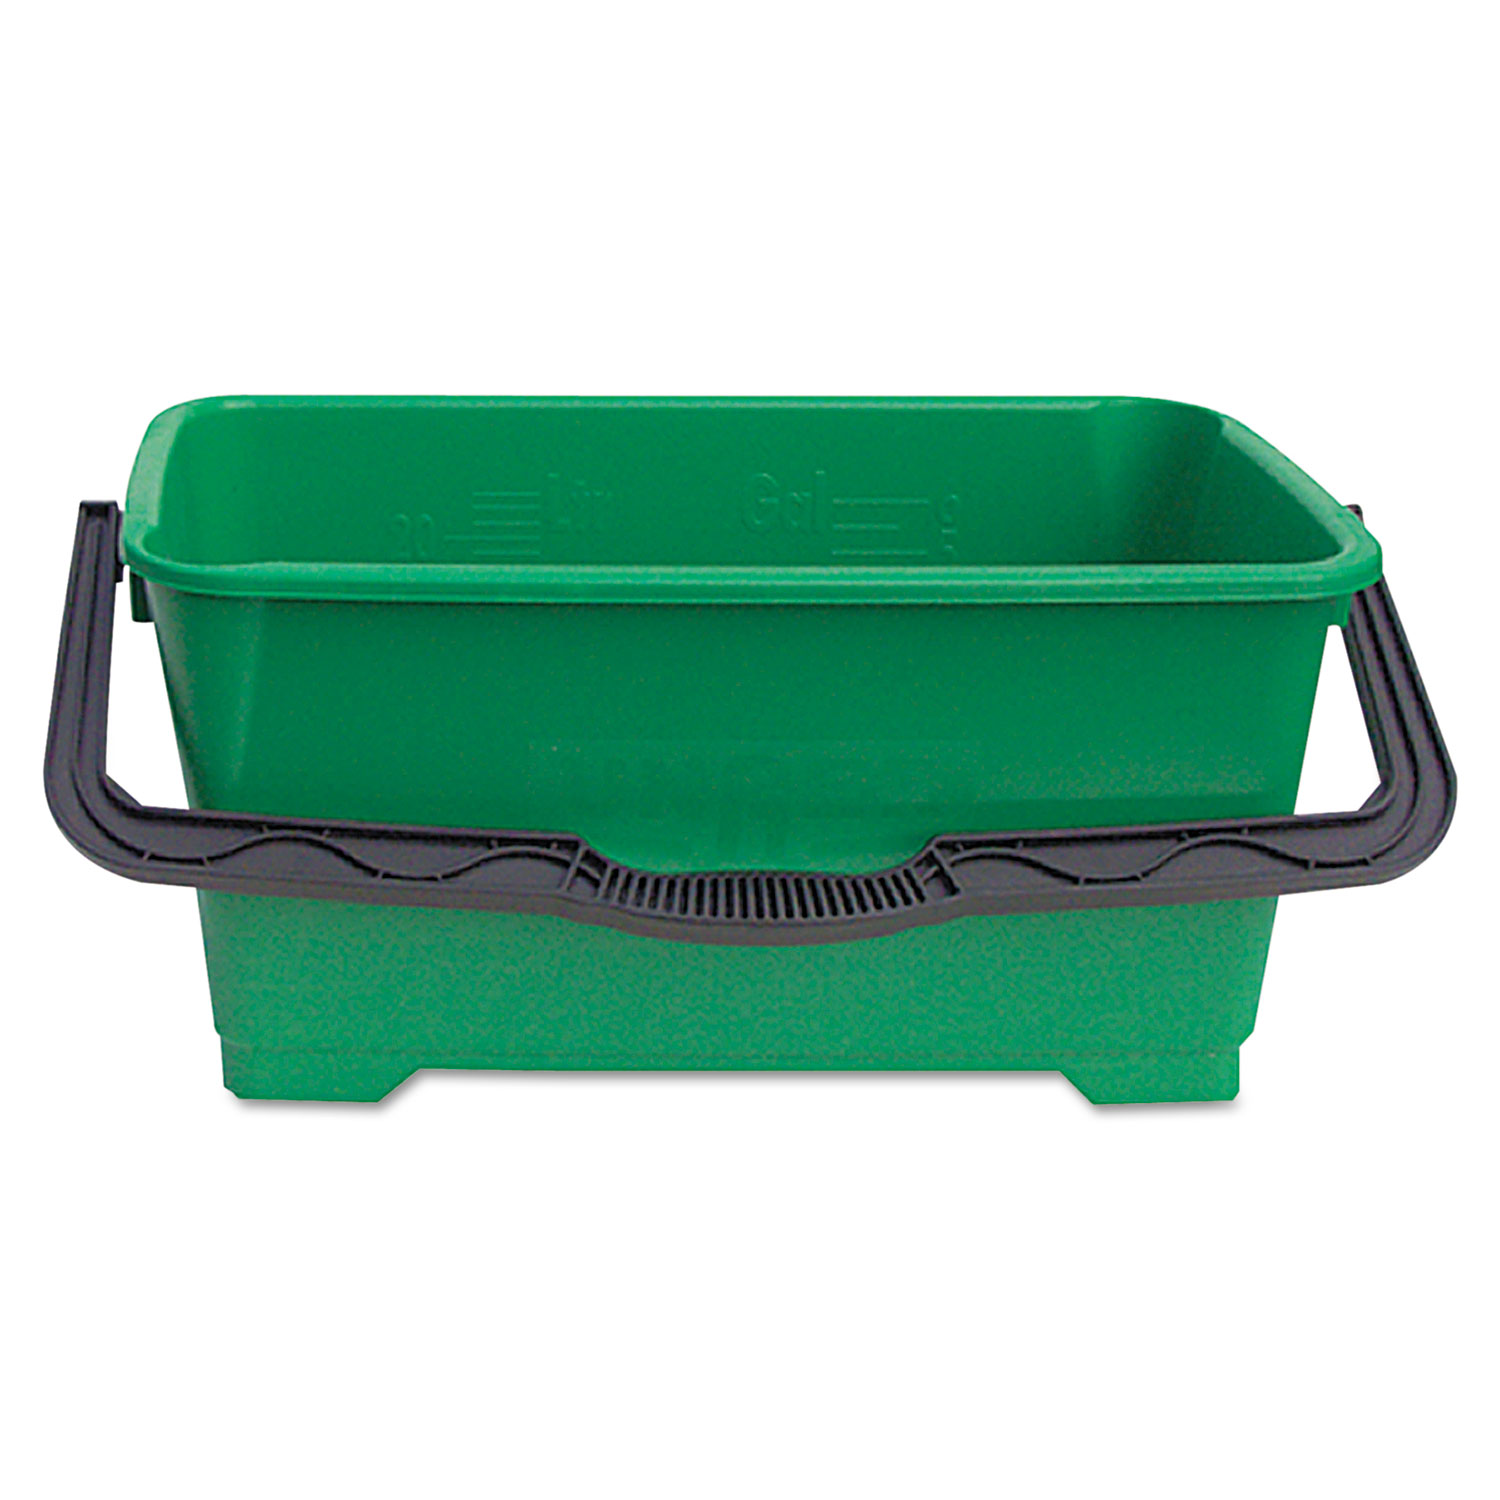  Unger QB220 Pro Bucket, 6gal, Plastic, Green (UNGQB220) 